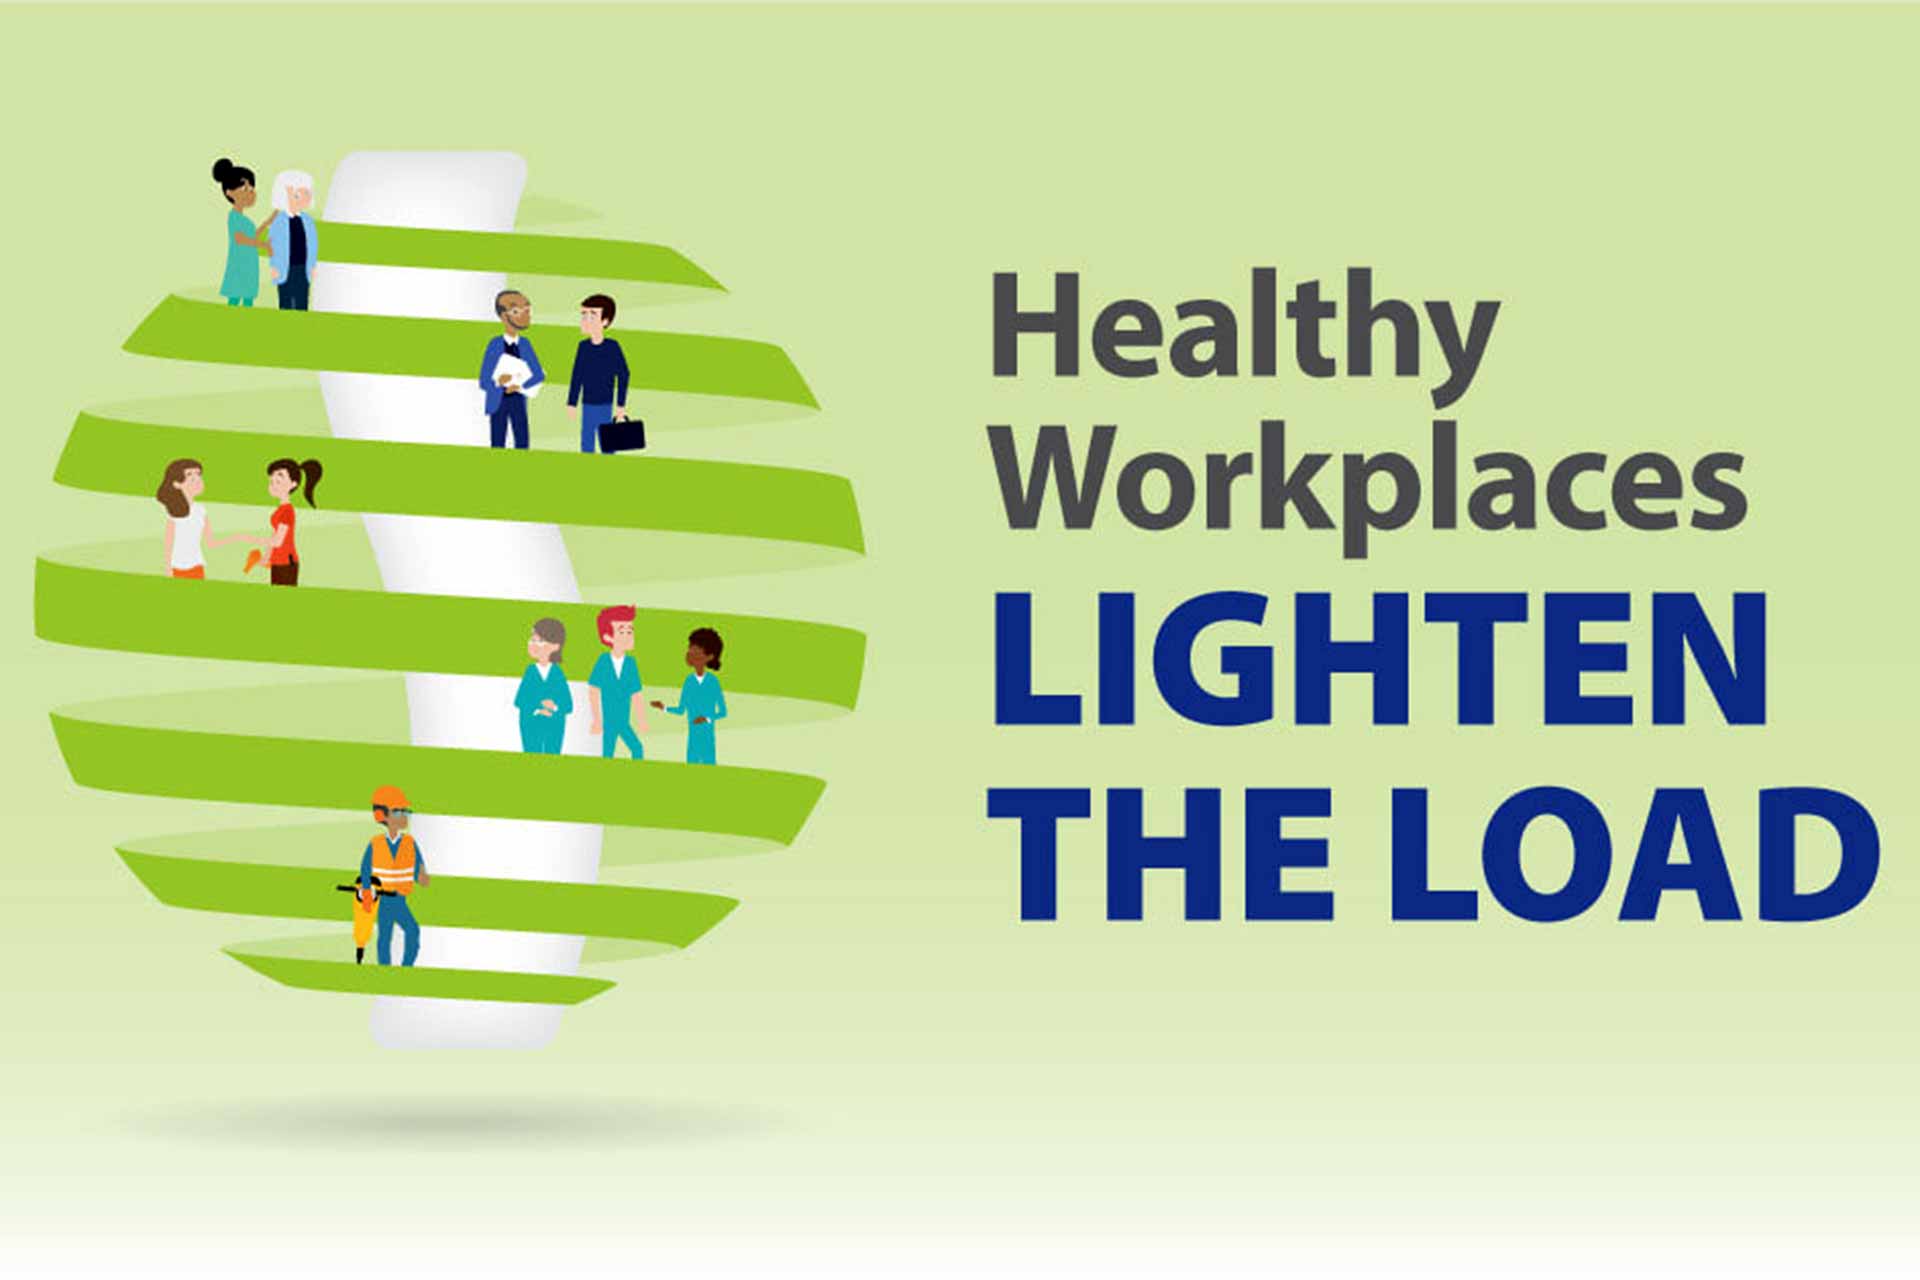 EU-OSHA launches Healthy Workplaces Campaign 2020-2022